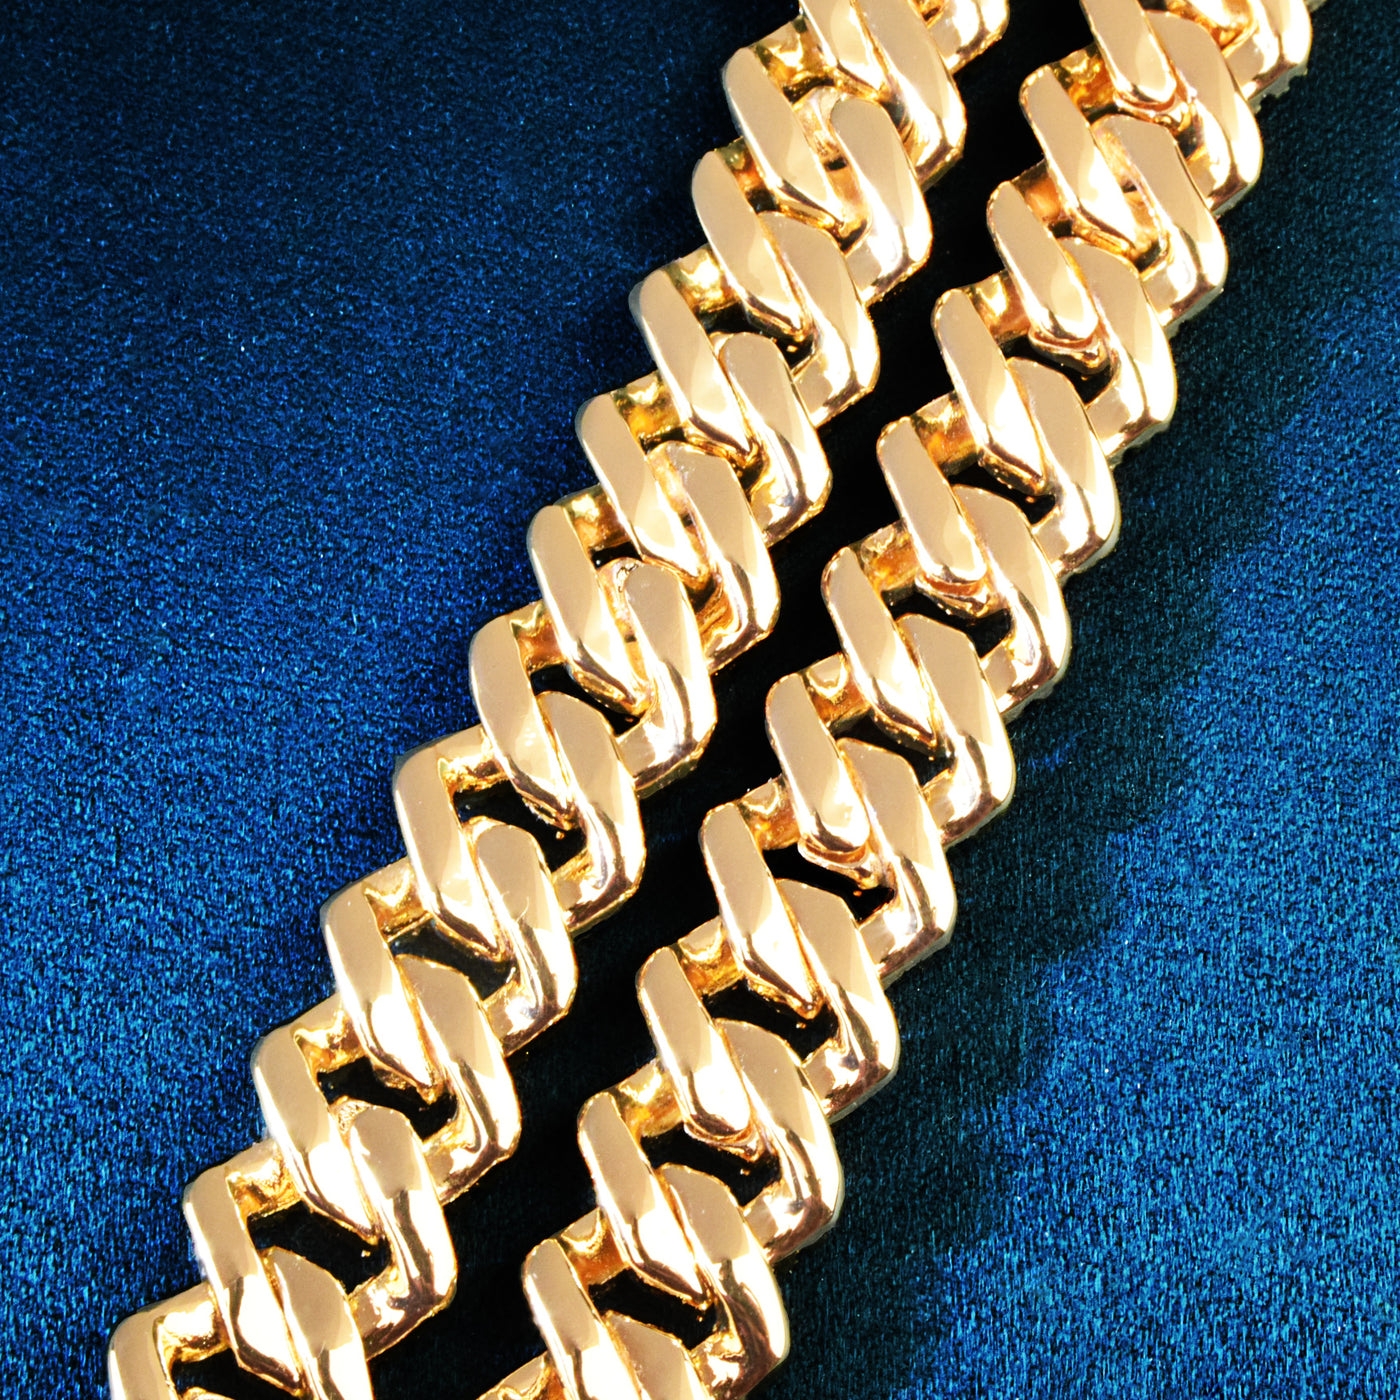 14mm Miami Cuban Chain Bracelet